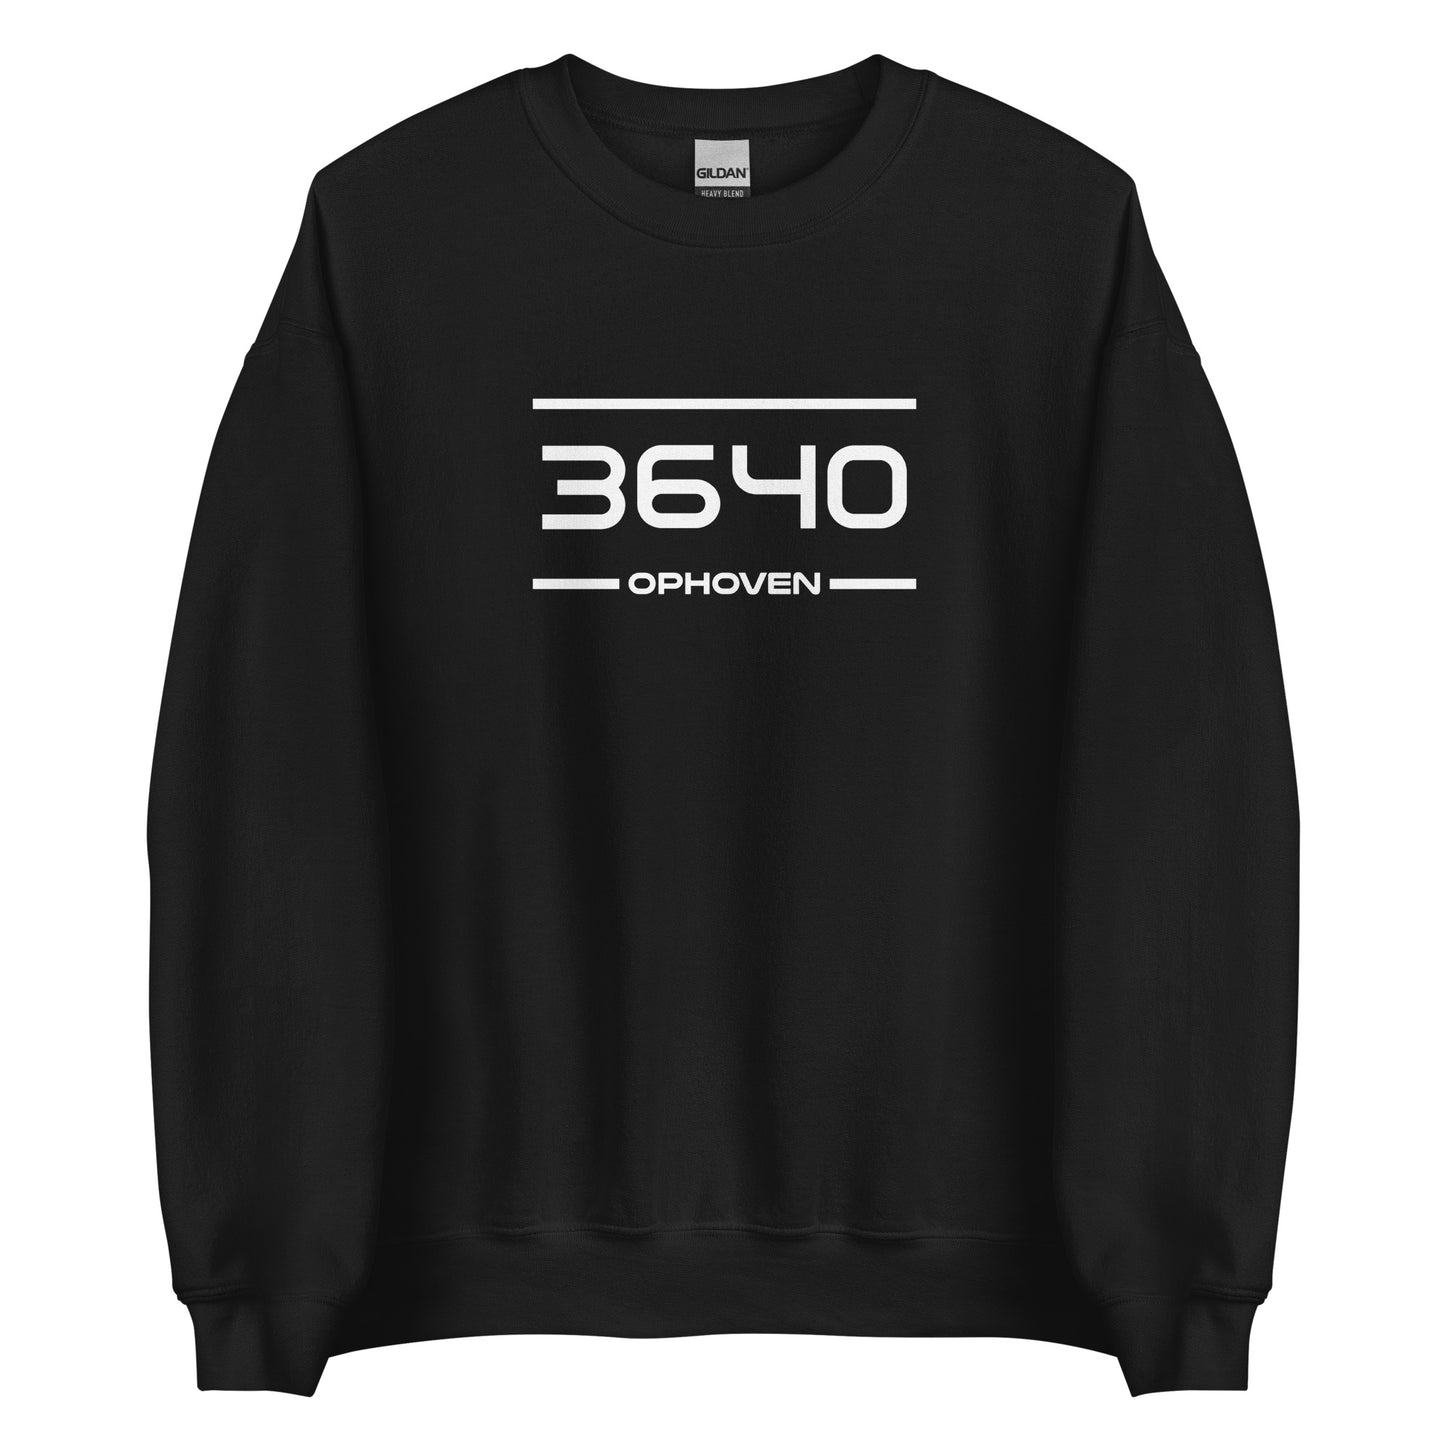 Sweater - 3640 - Ophoven (M/V)